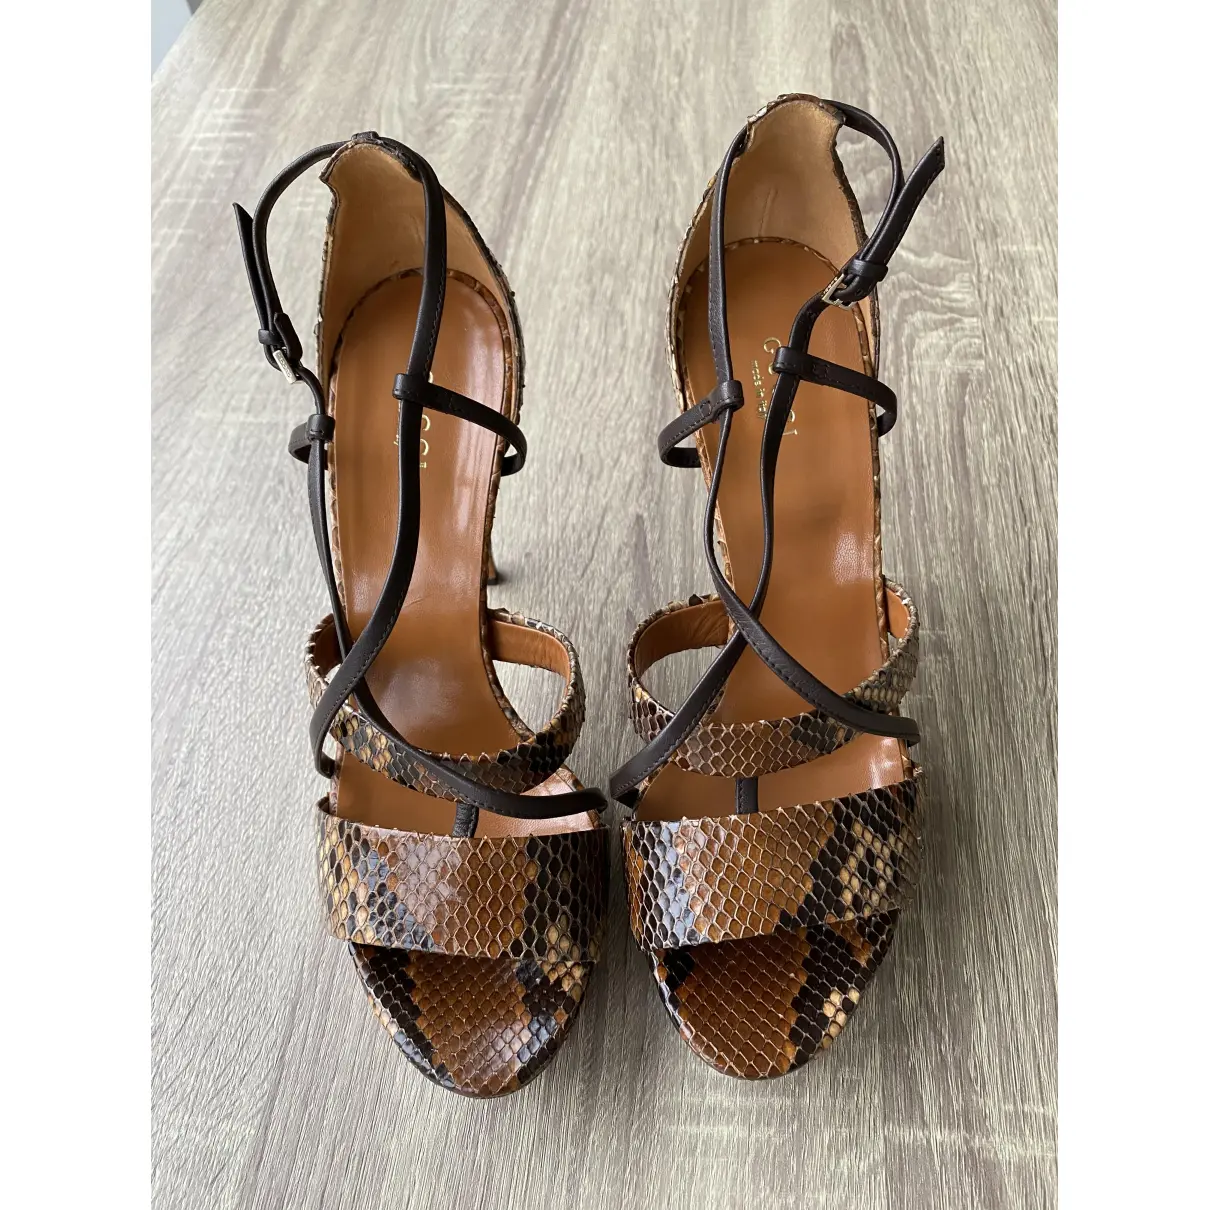 Buy Gucci Python heels online